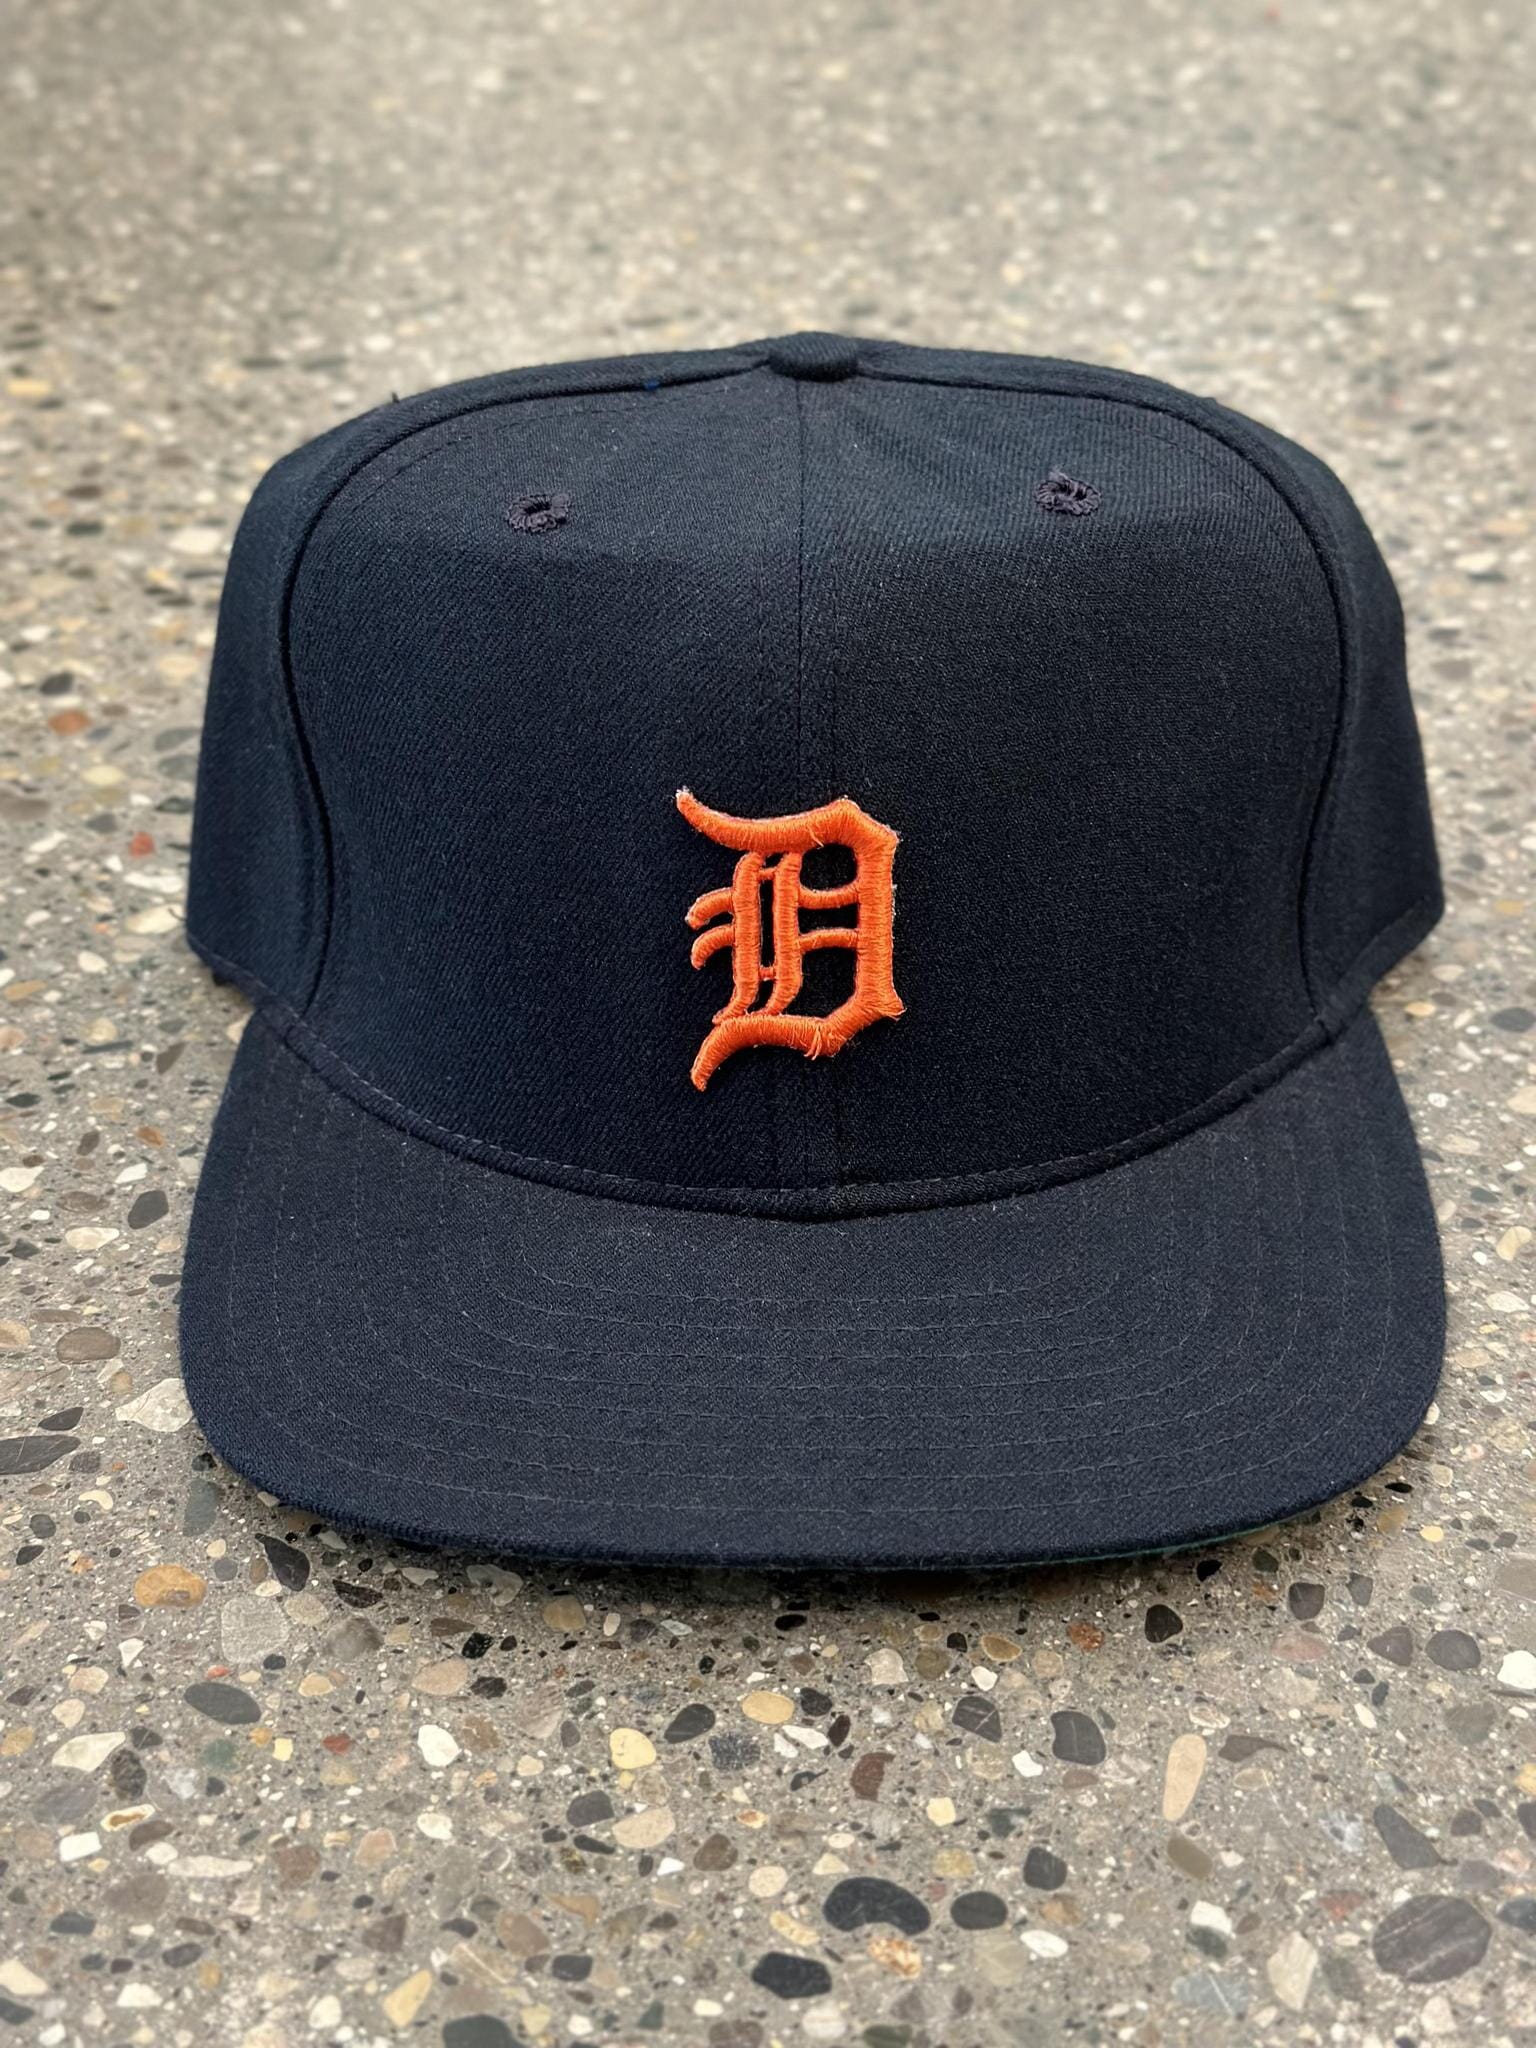 Detroit Tigers New Era Vintage 9FIFTY Snapback Hat - White